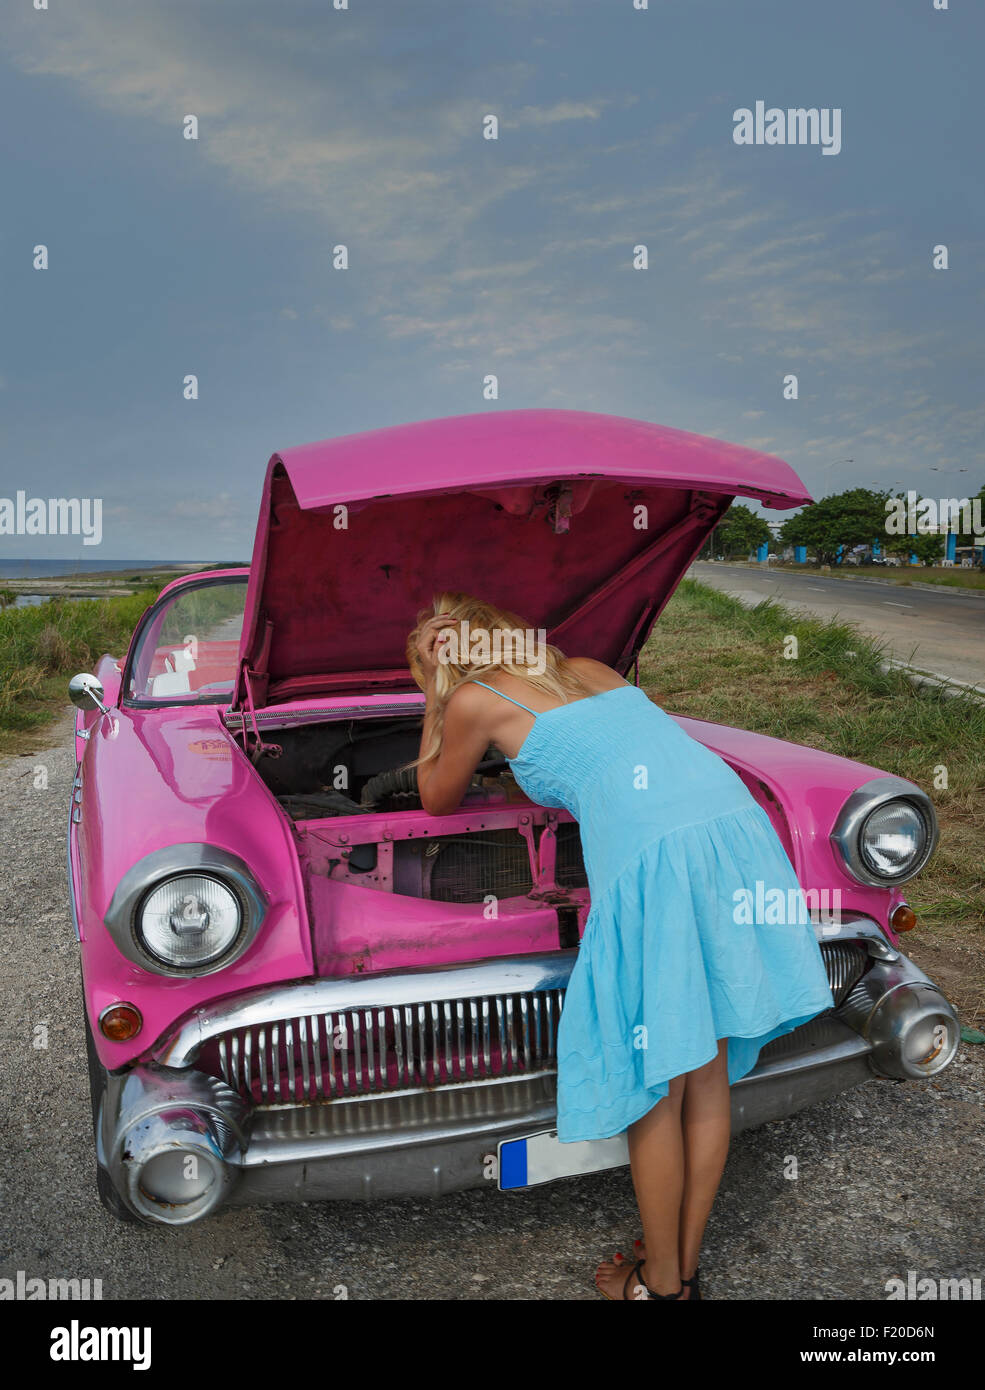 Mujer joven tratando de arreglar una vendimia convertible en la costa, La Habana, Cuba Foto de stock